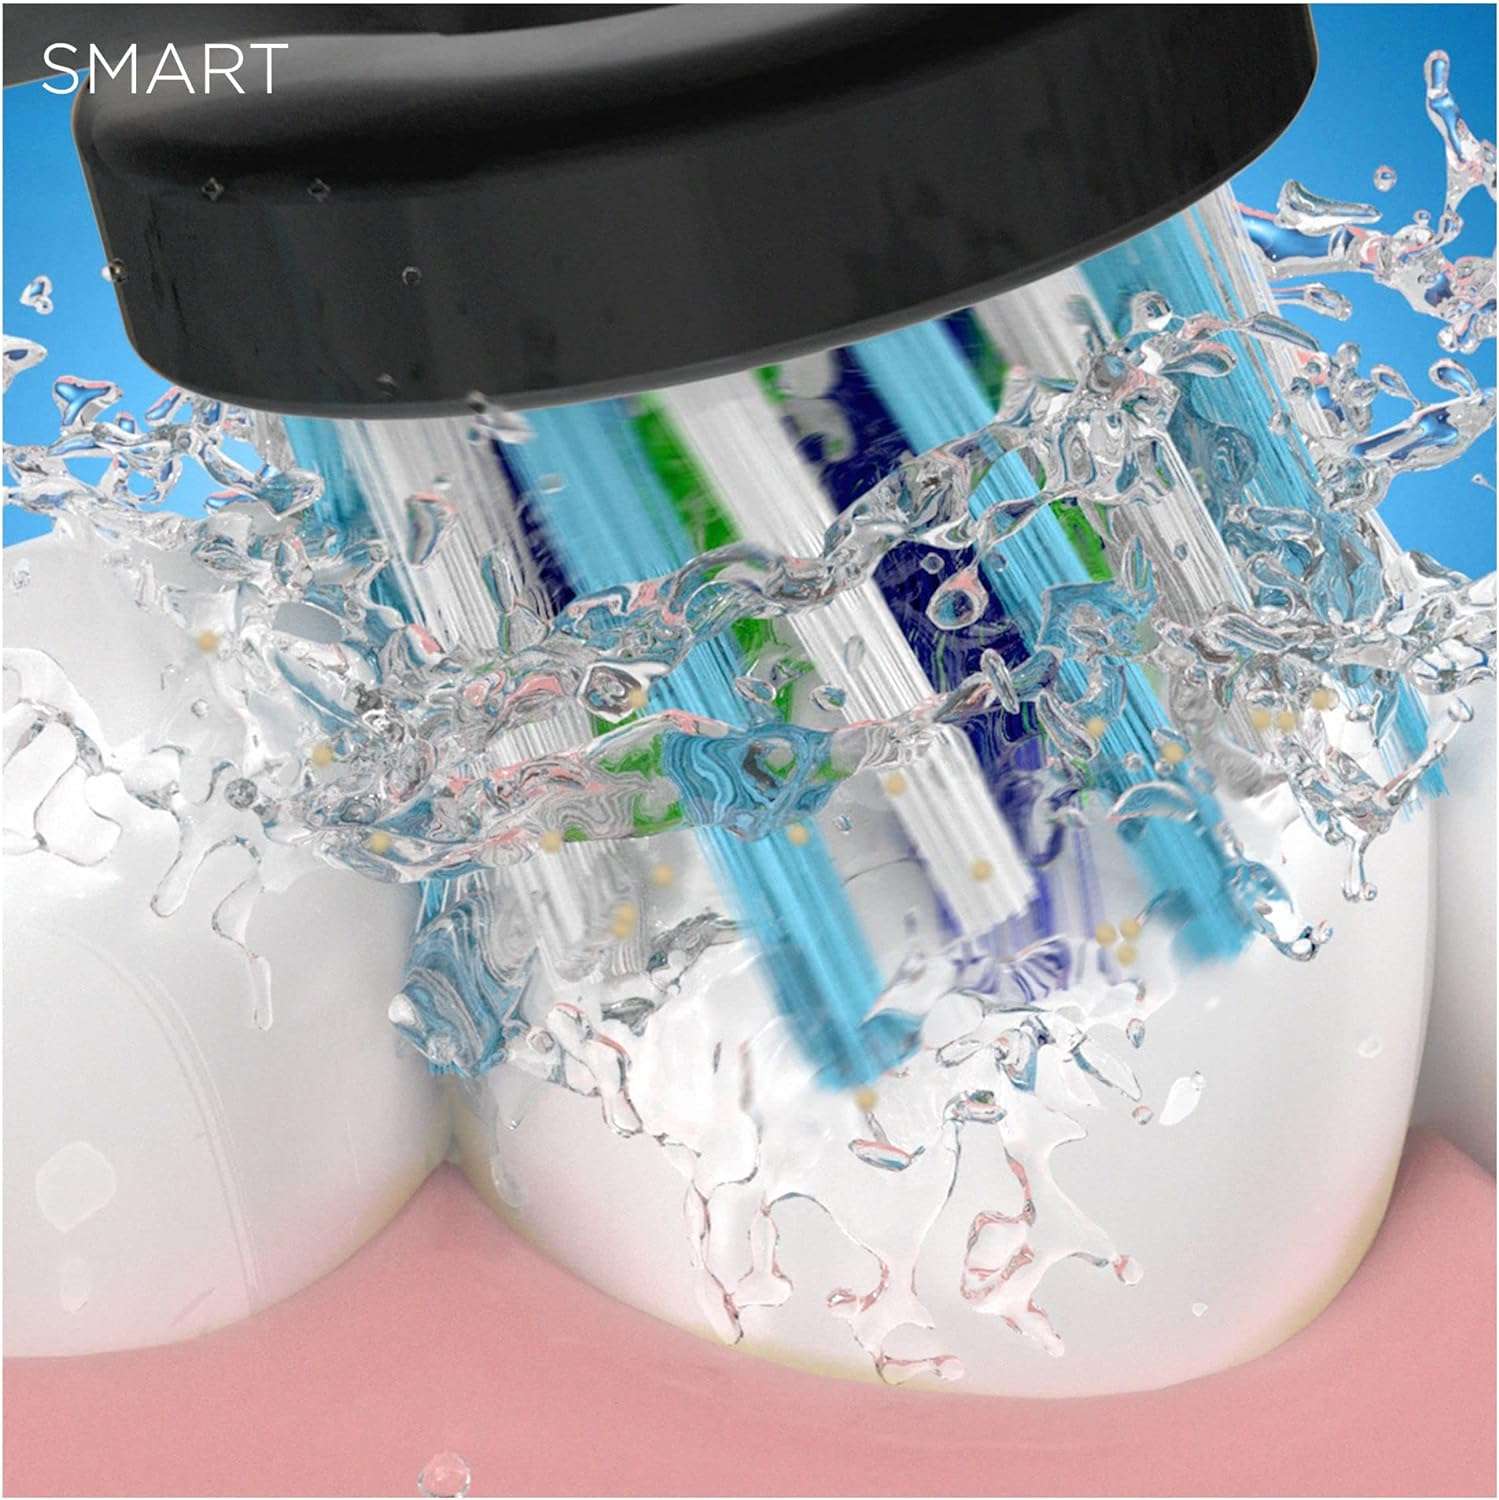 oral-b-smart-4-4500-lepico-spazzolino-elettrico-prezzo-bomba-testina